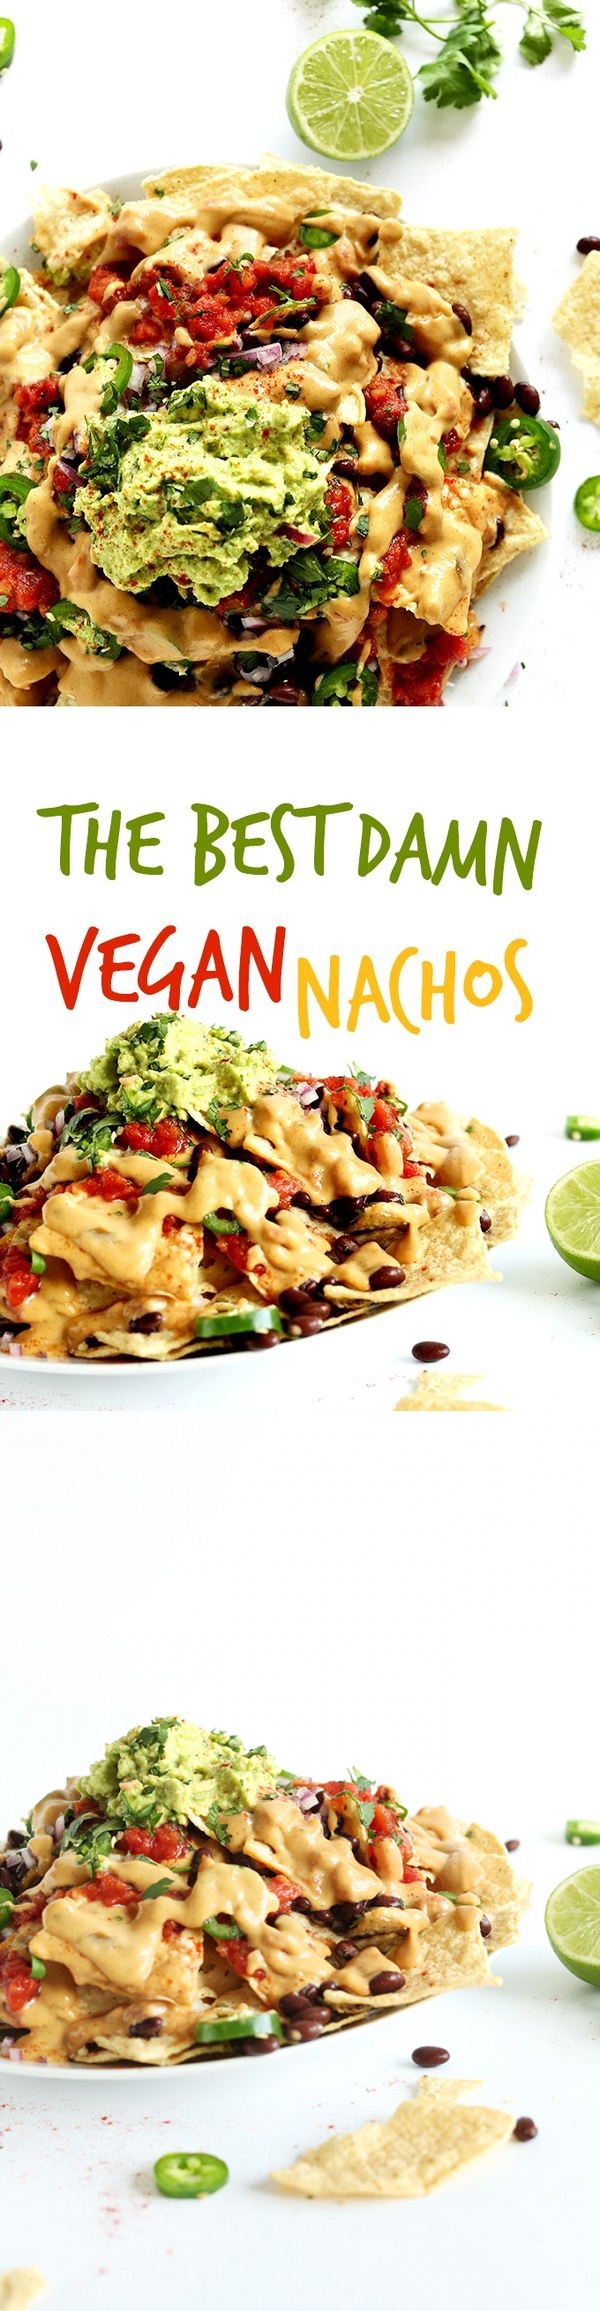 The Best Damn Vegan Nachos